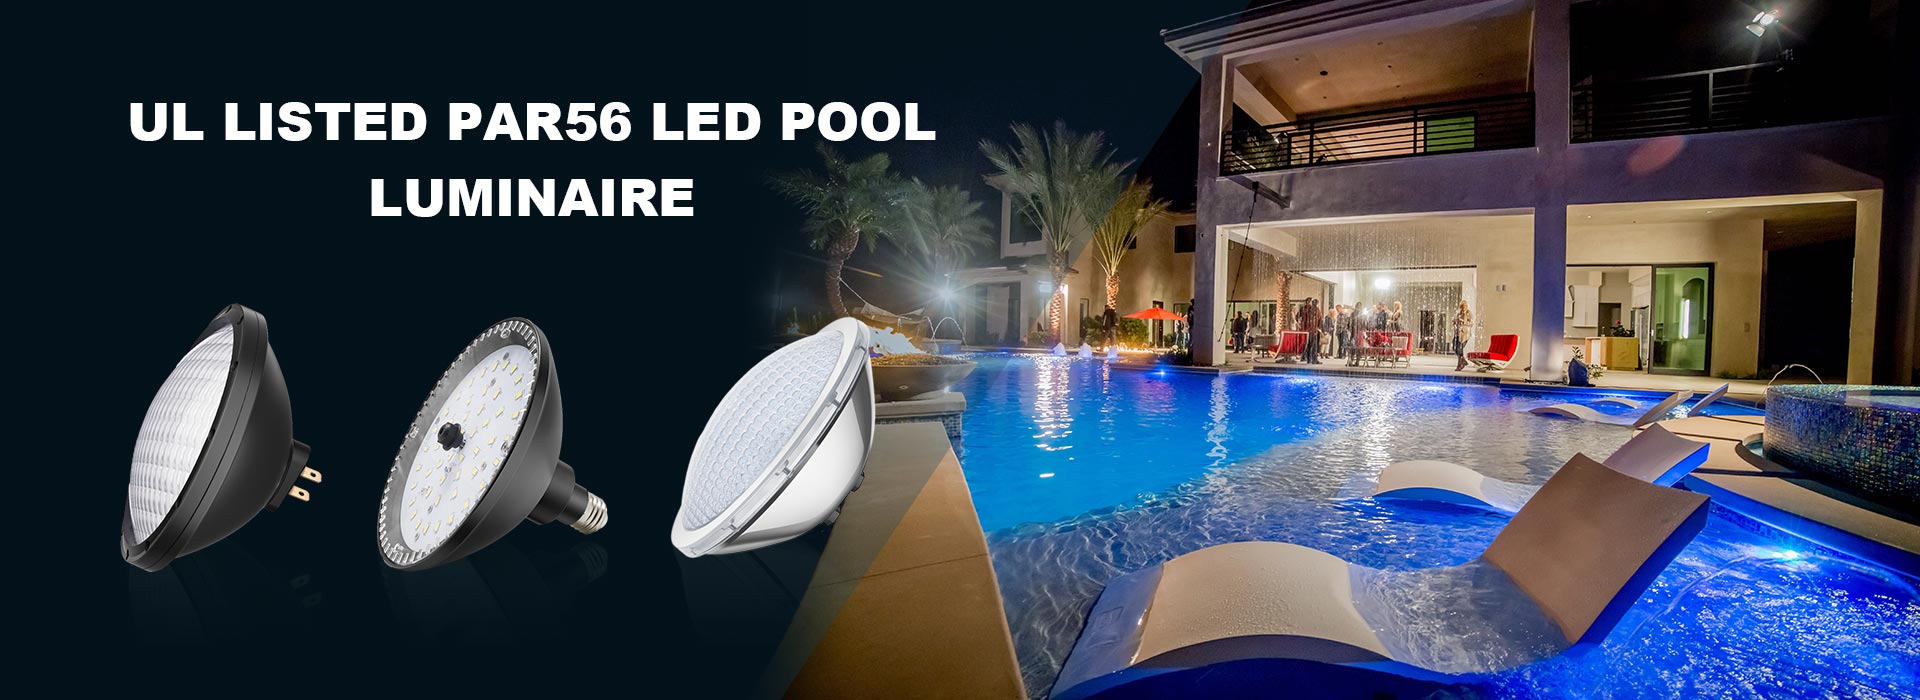 LED Par56 Pool Lights with UL Certification